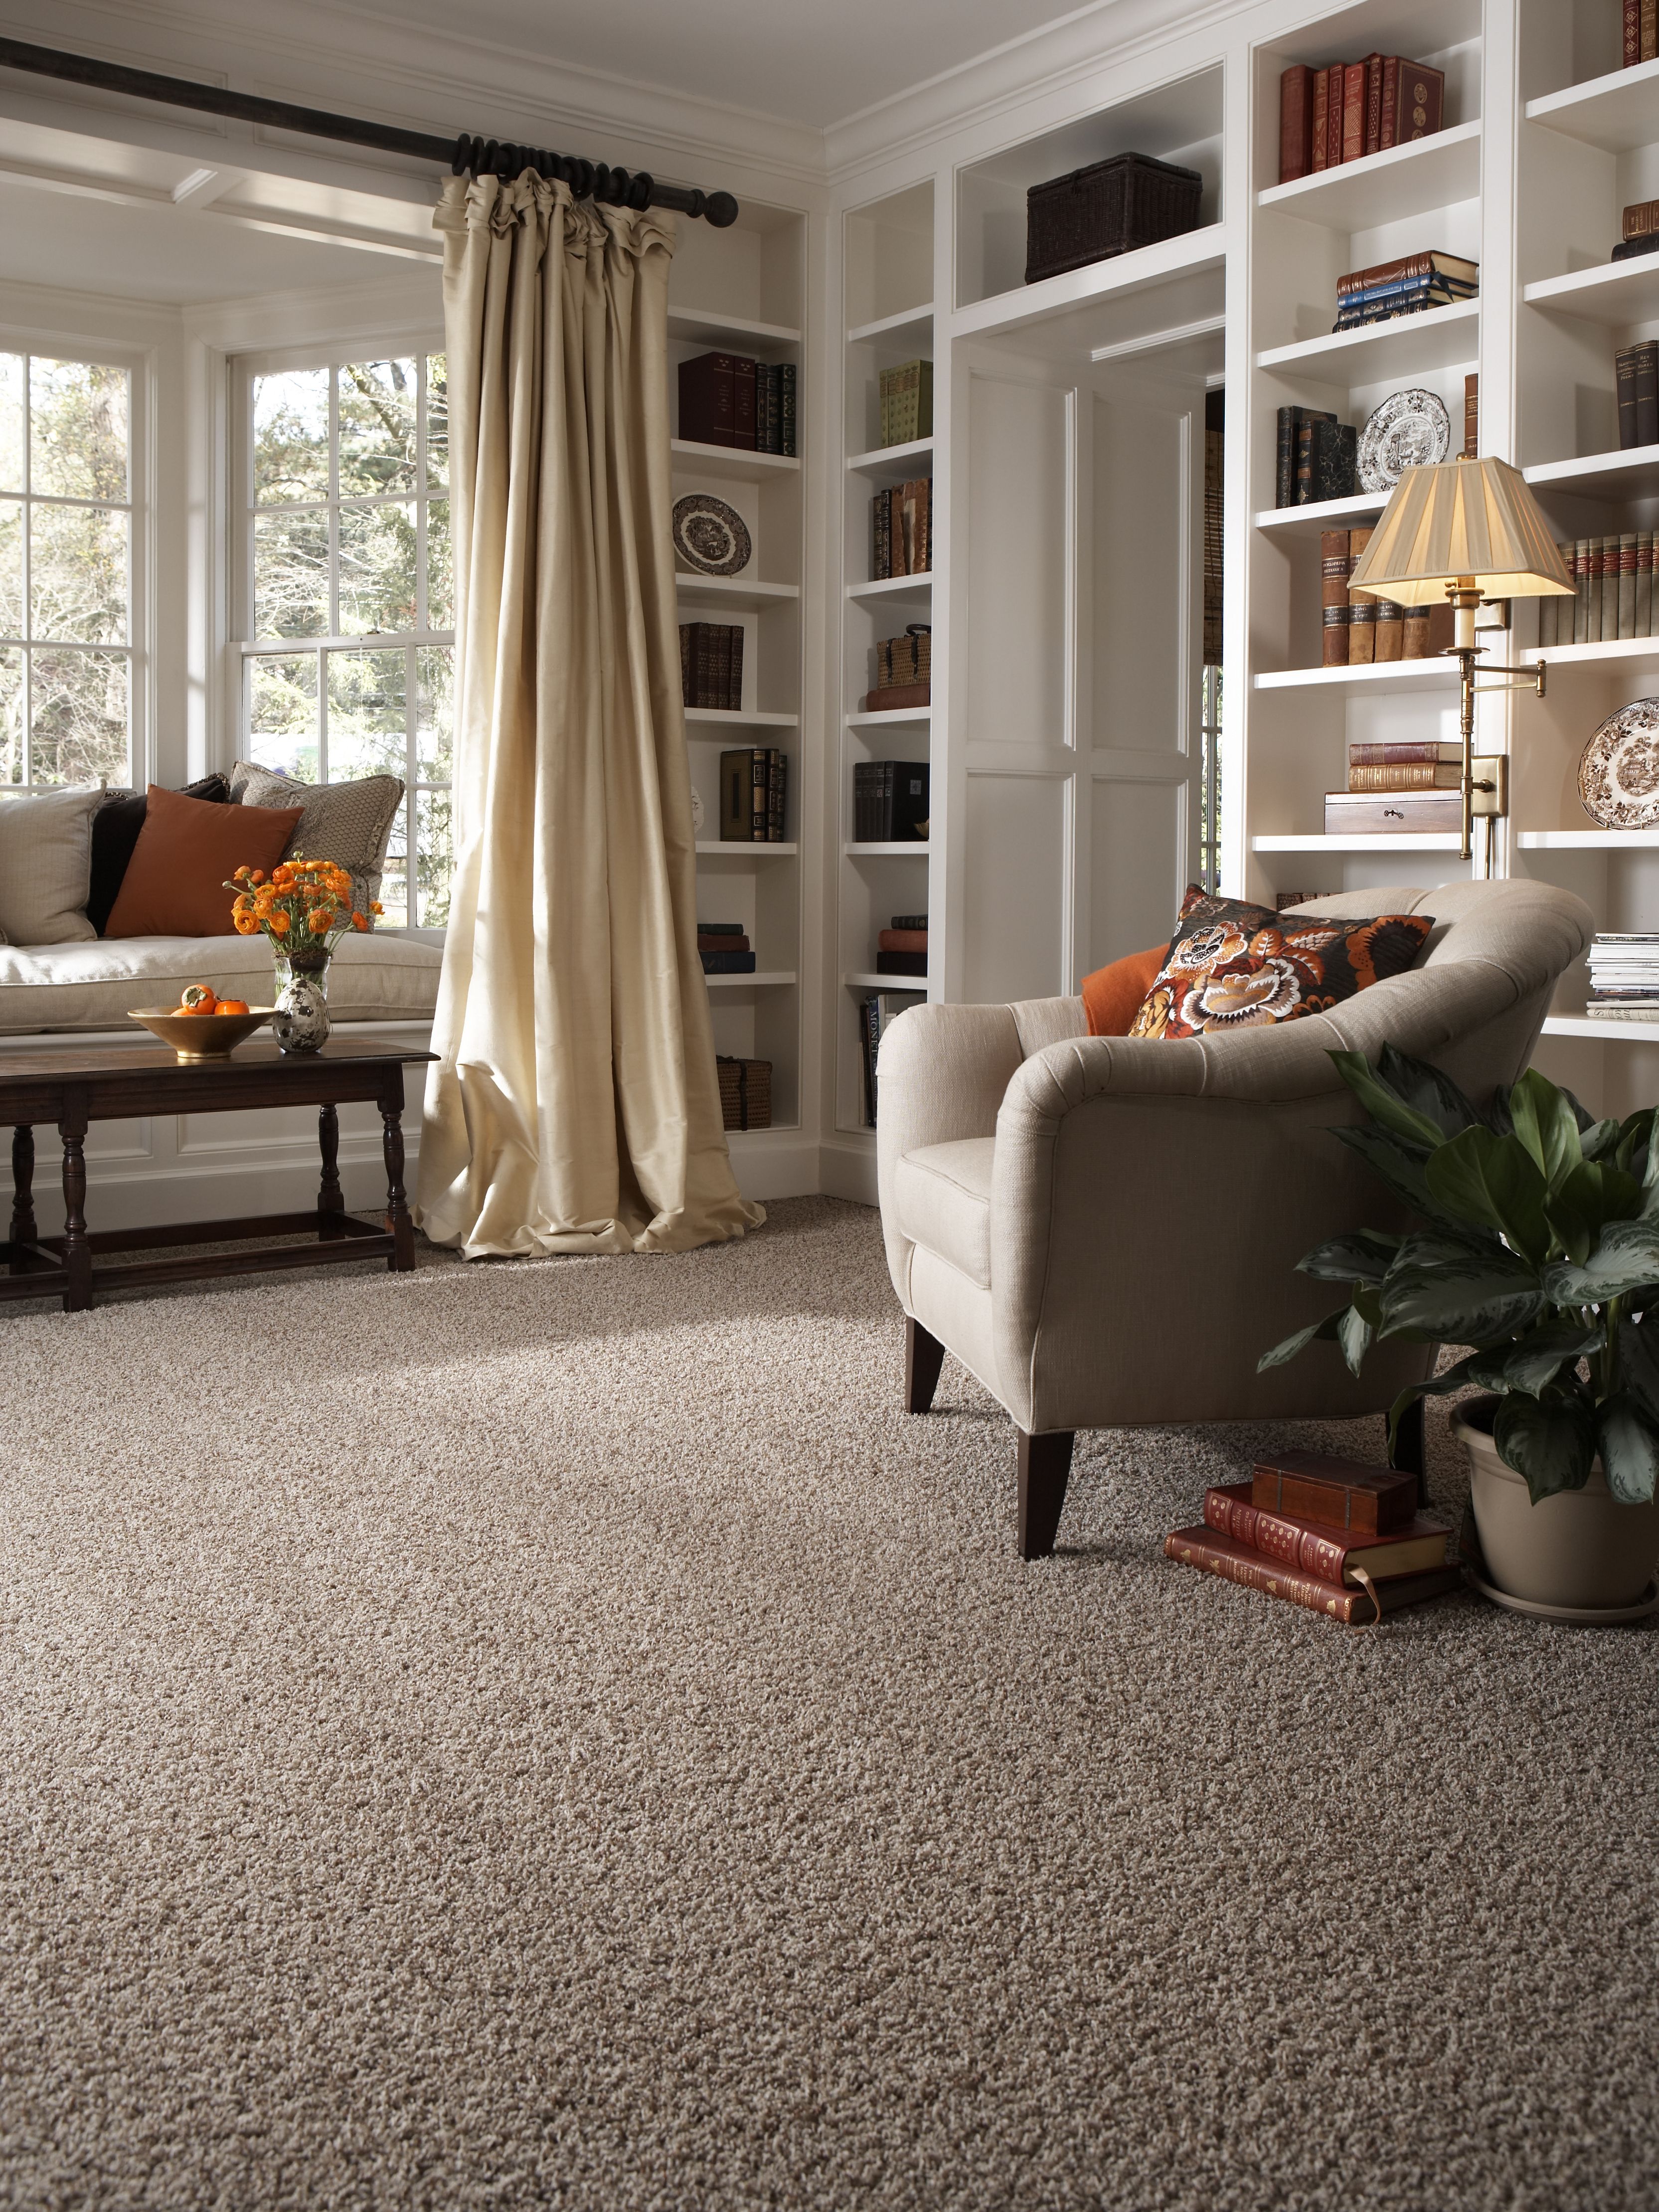 Carpet in living room | Budget Flooring, Inc.